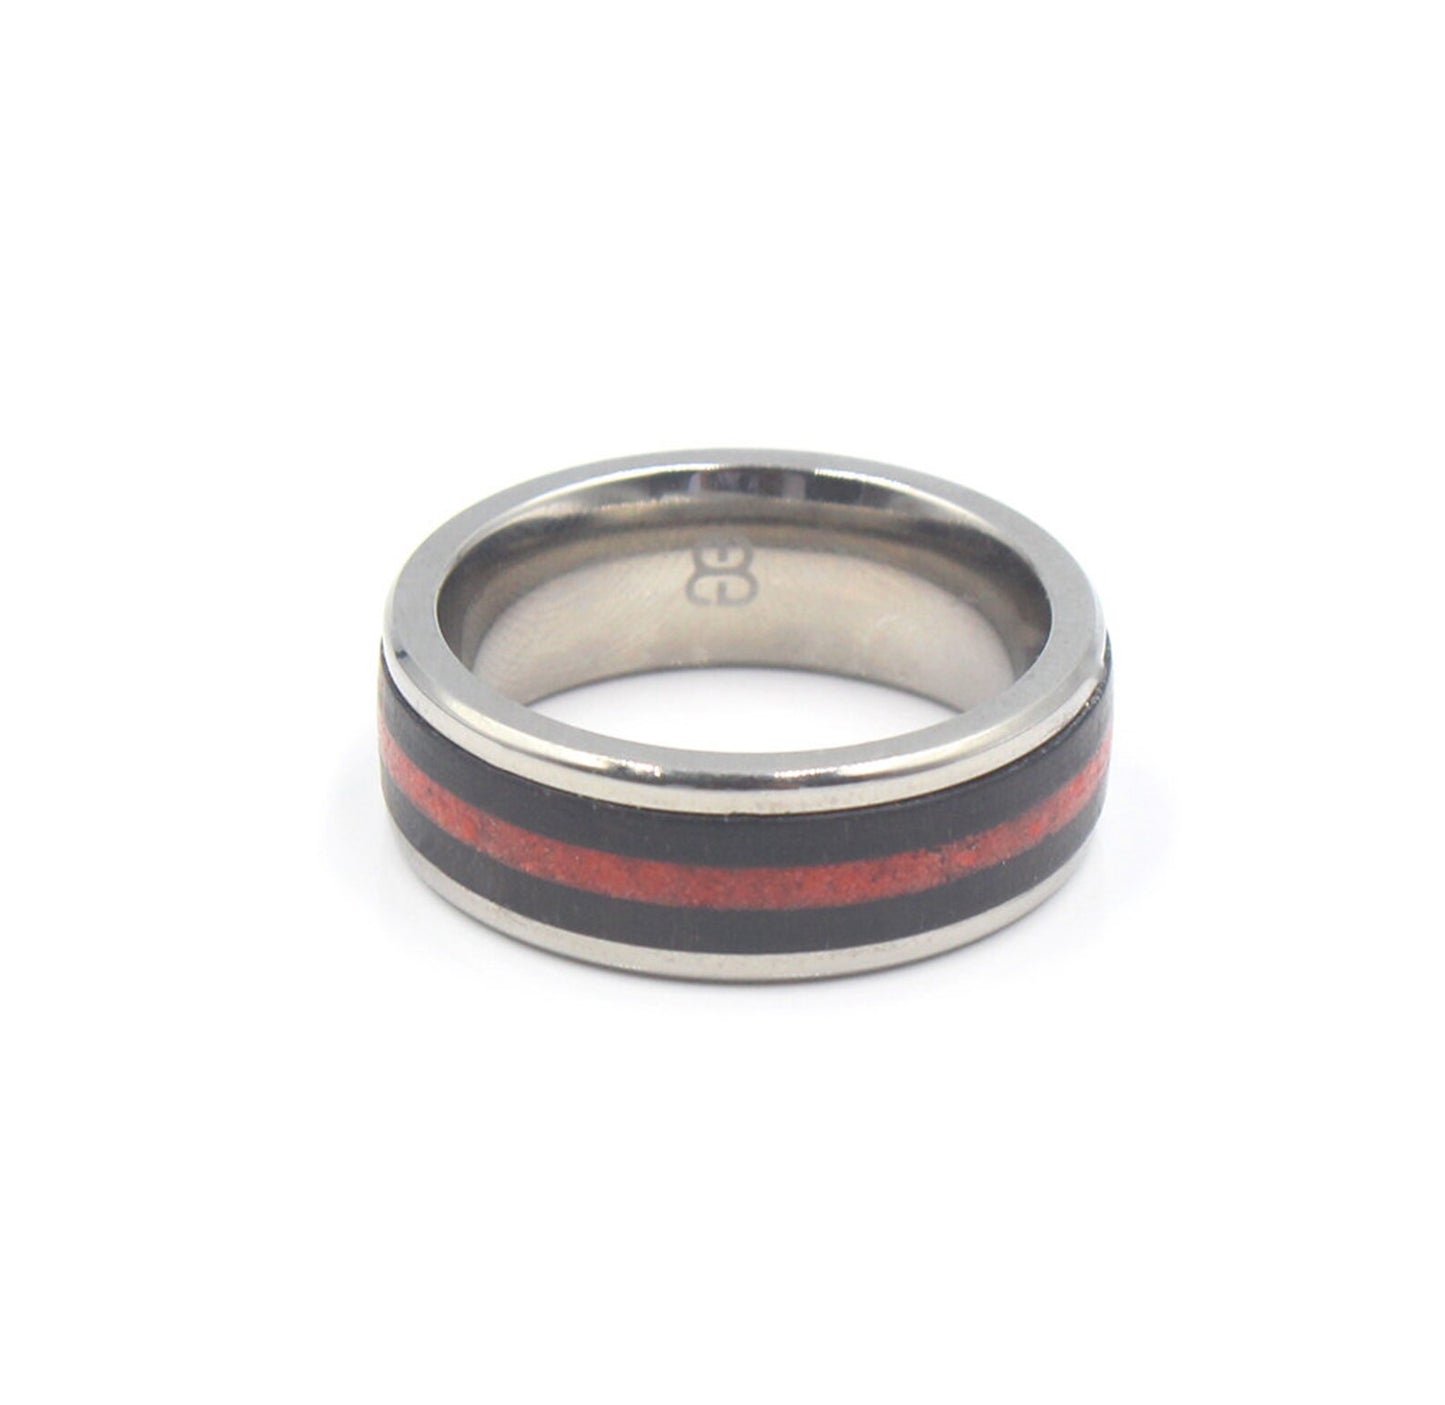 Black Arang Wood and Red Jasper Ring